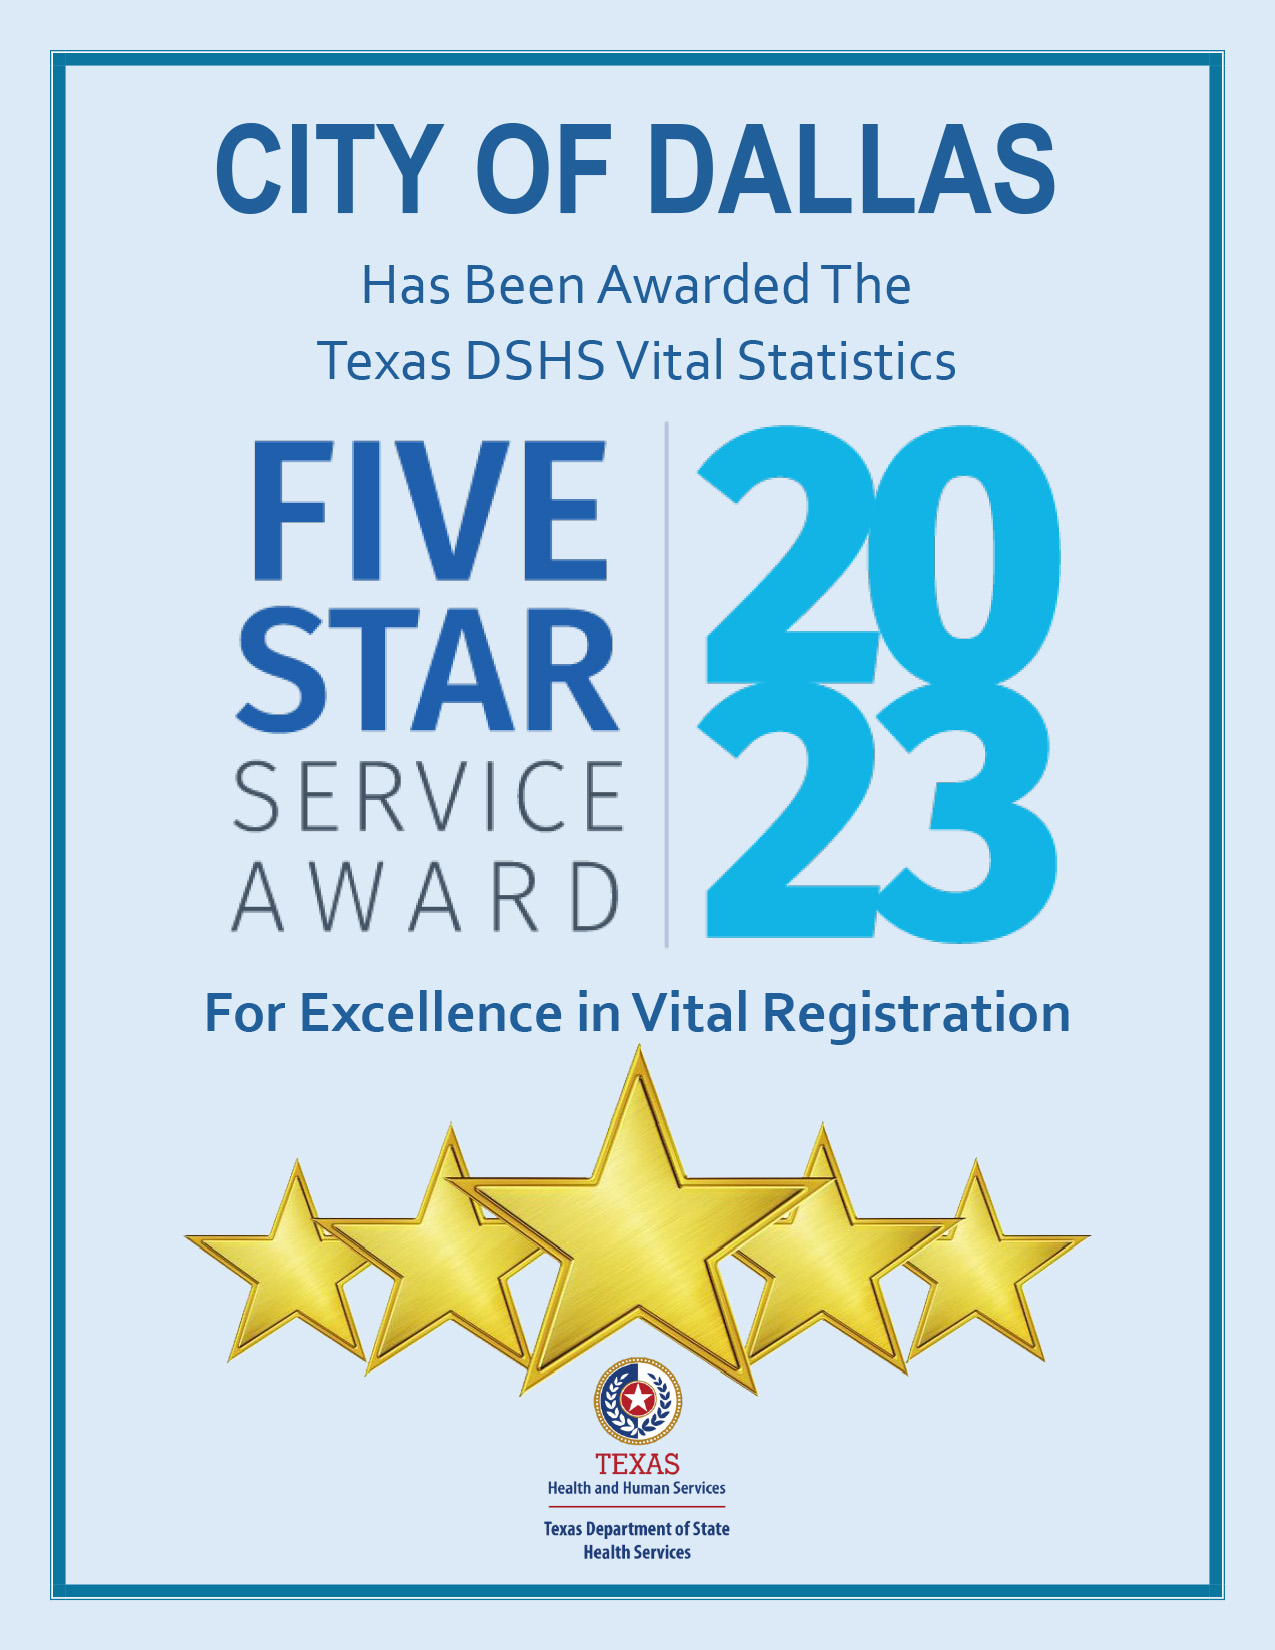 Five Star Service Award image